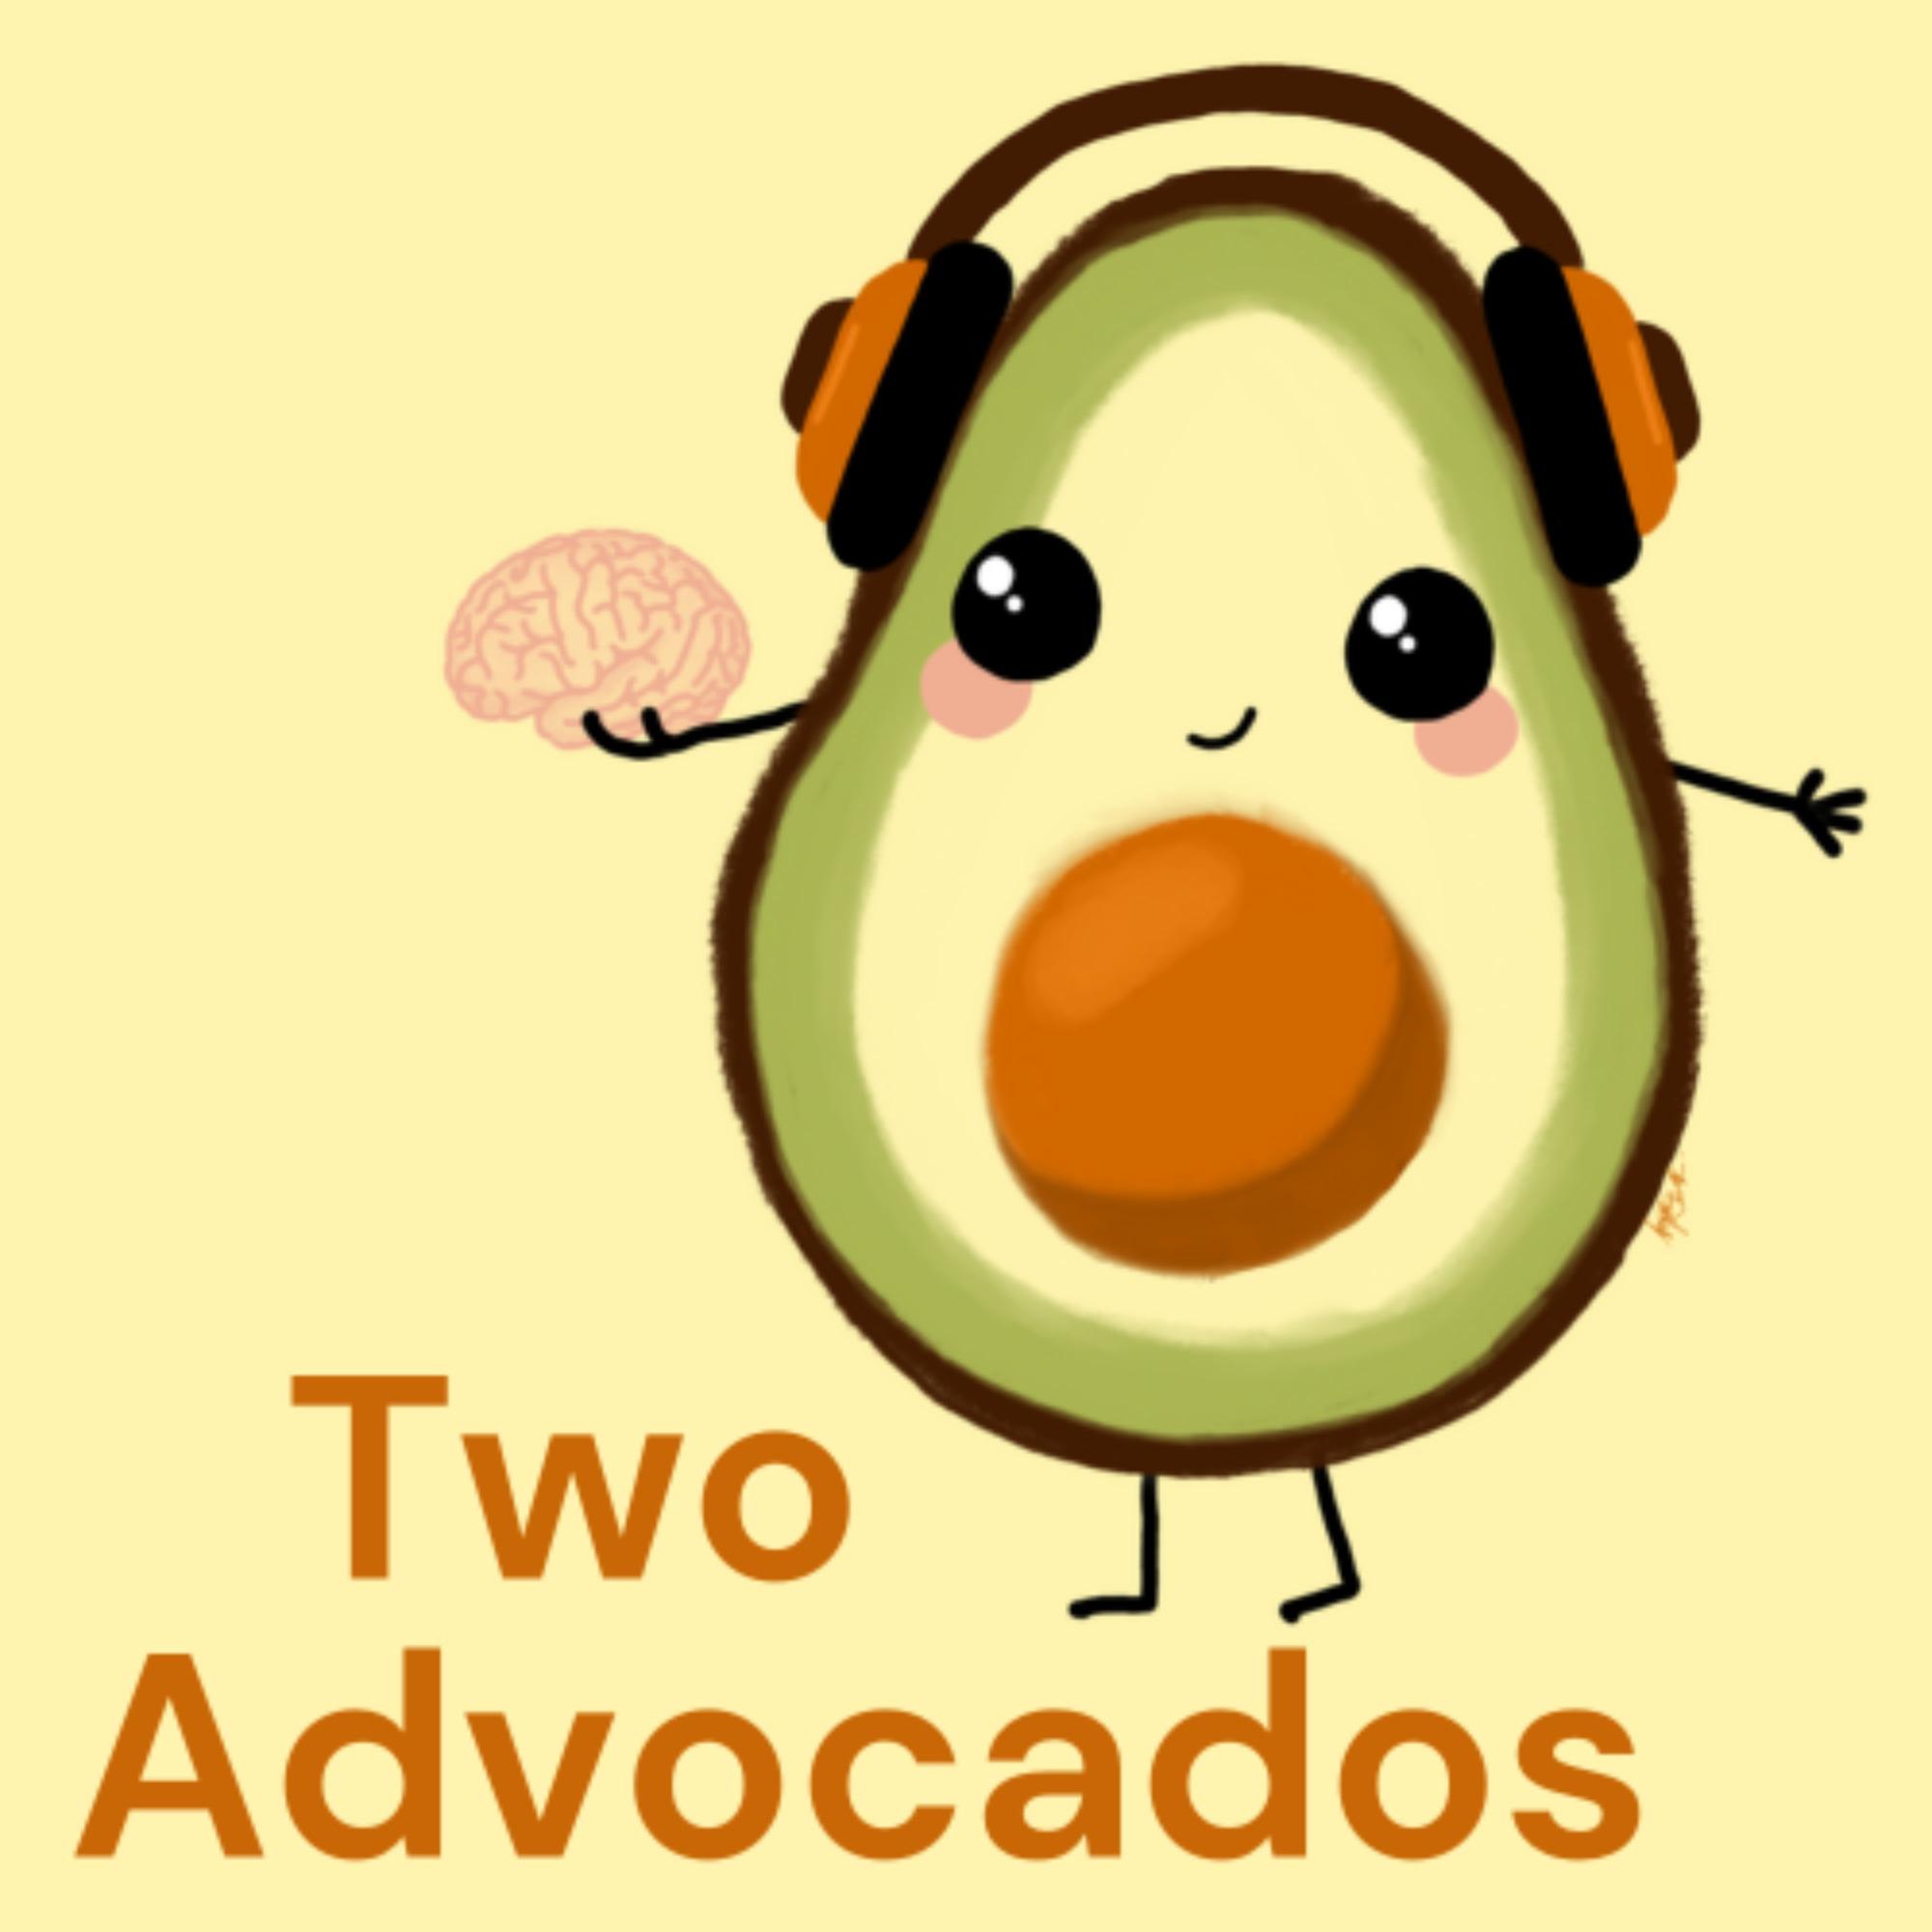 Two Advocados